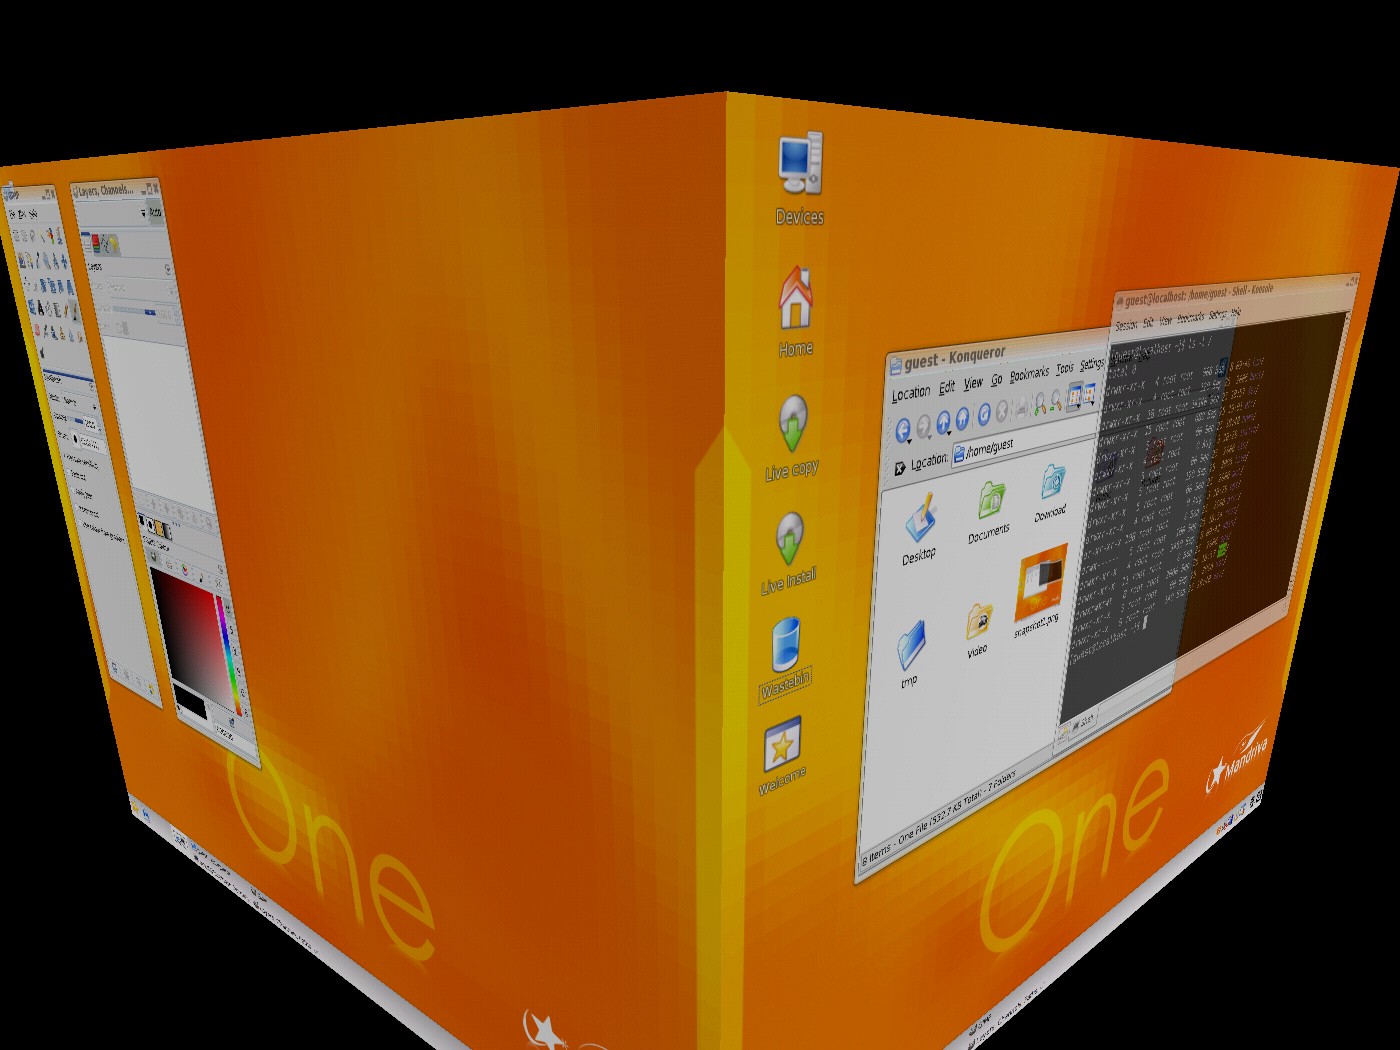 screenshot of Mandriva 2007 with Aiglx